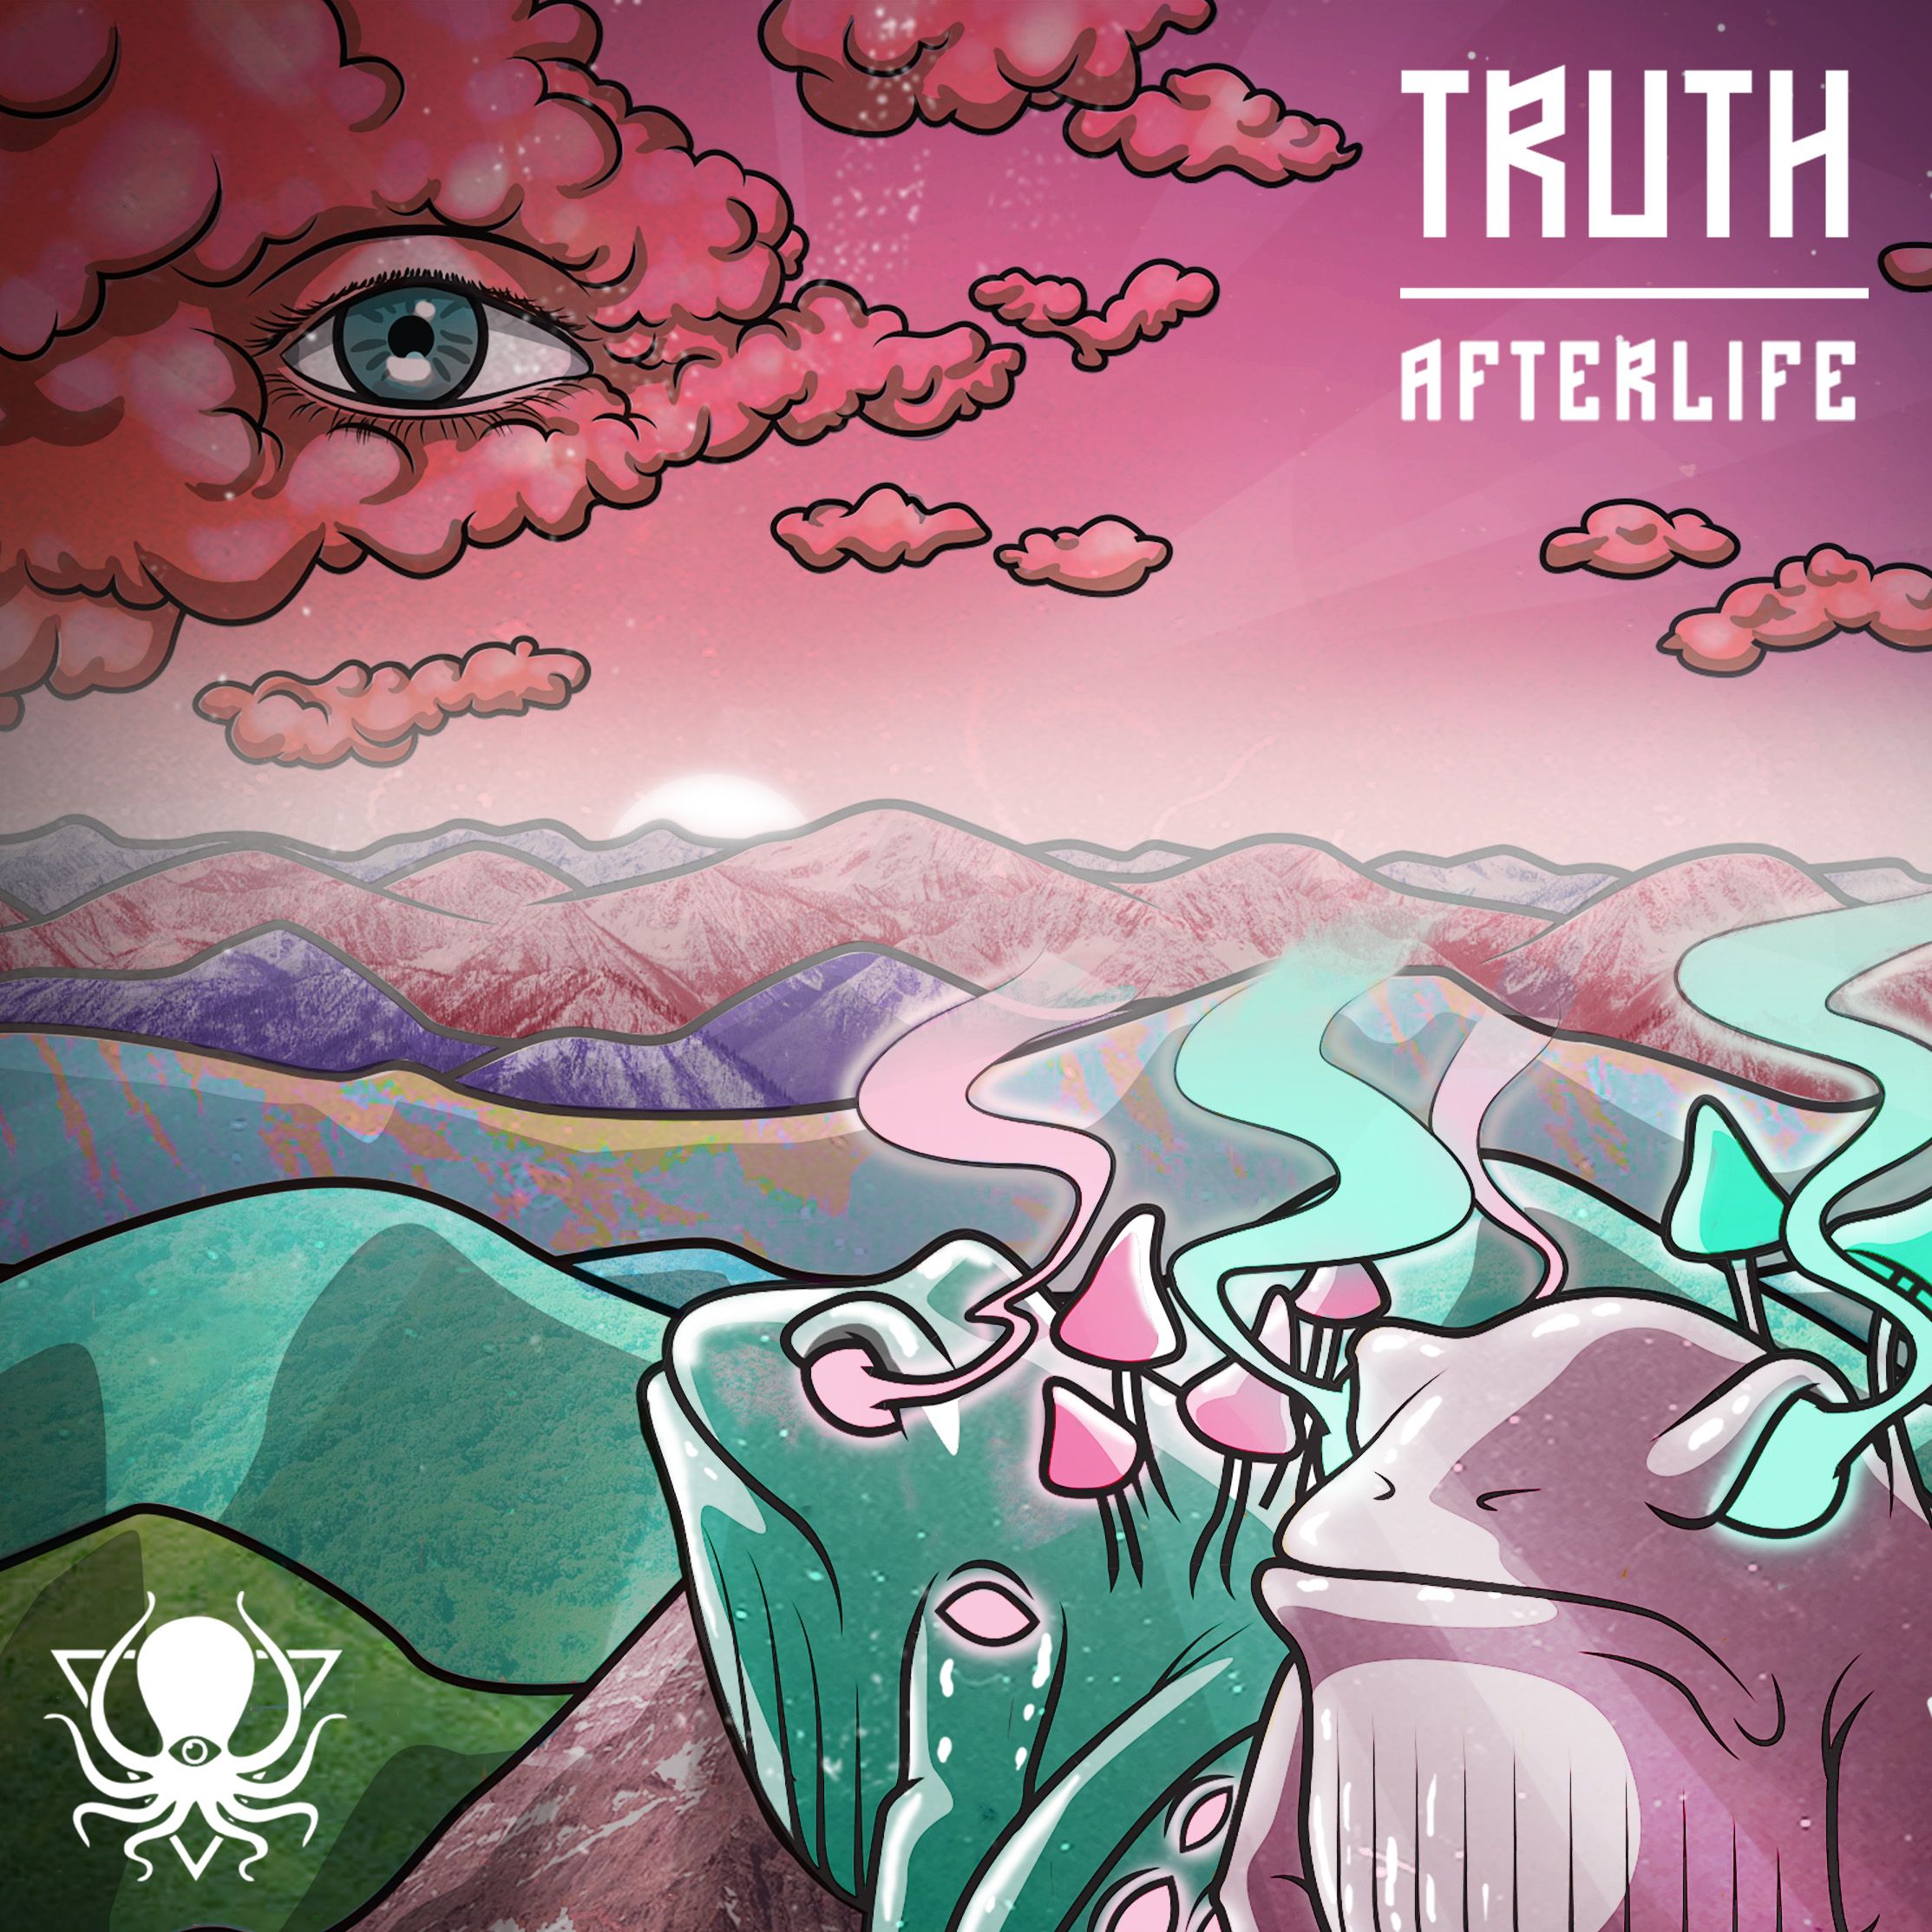 Parsisiųsti Truth - Afterlife (DDD095)